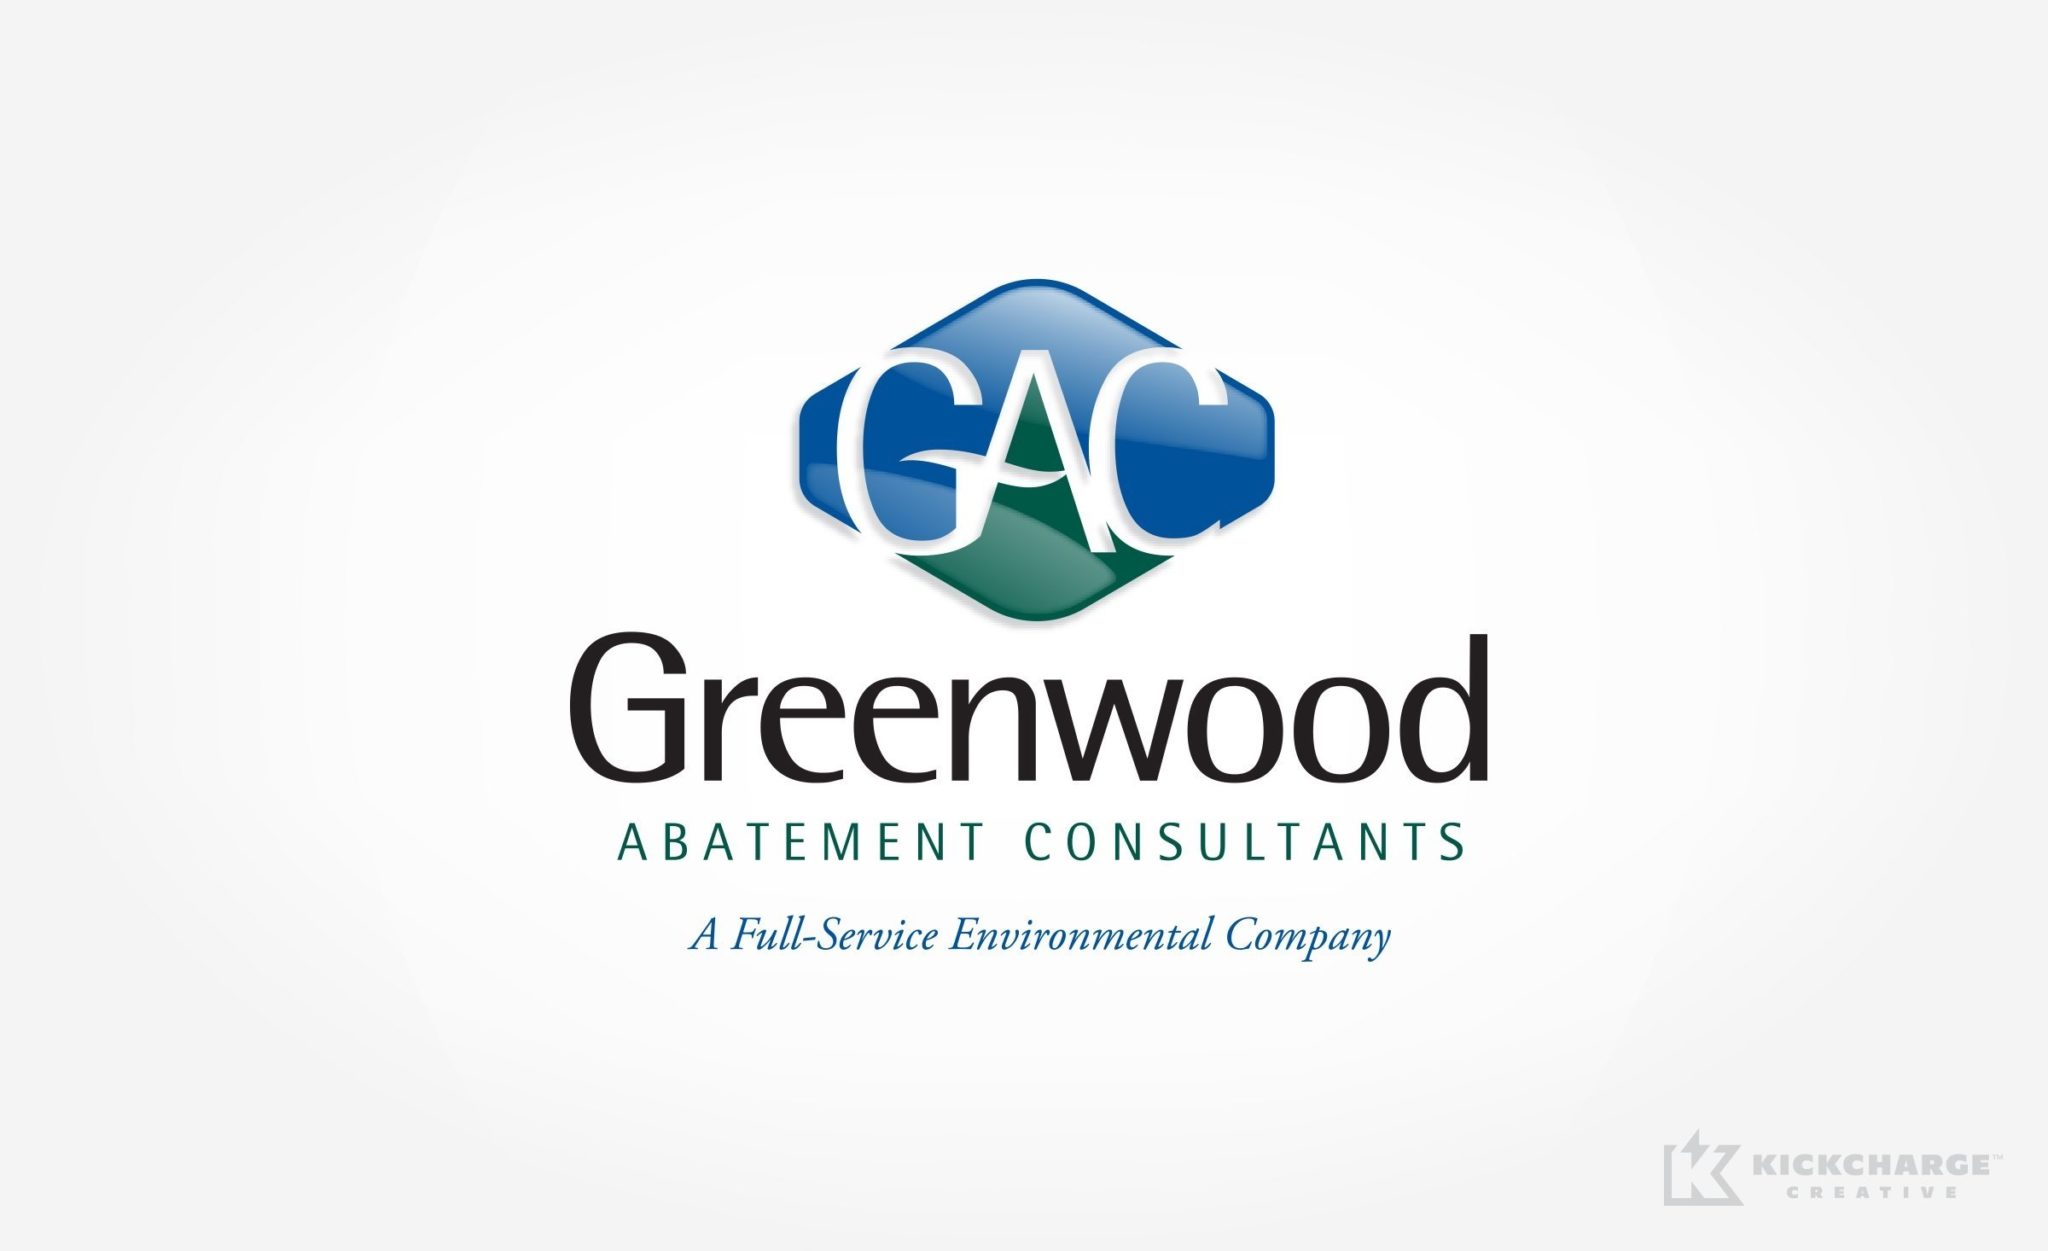 Logo design for a full service environmental company.